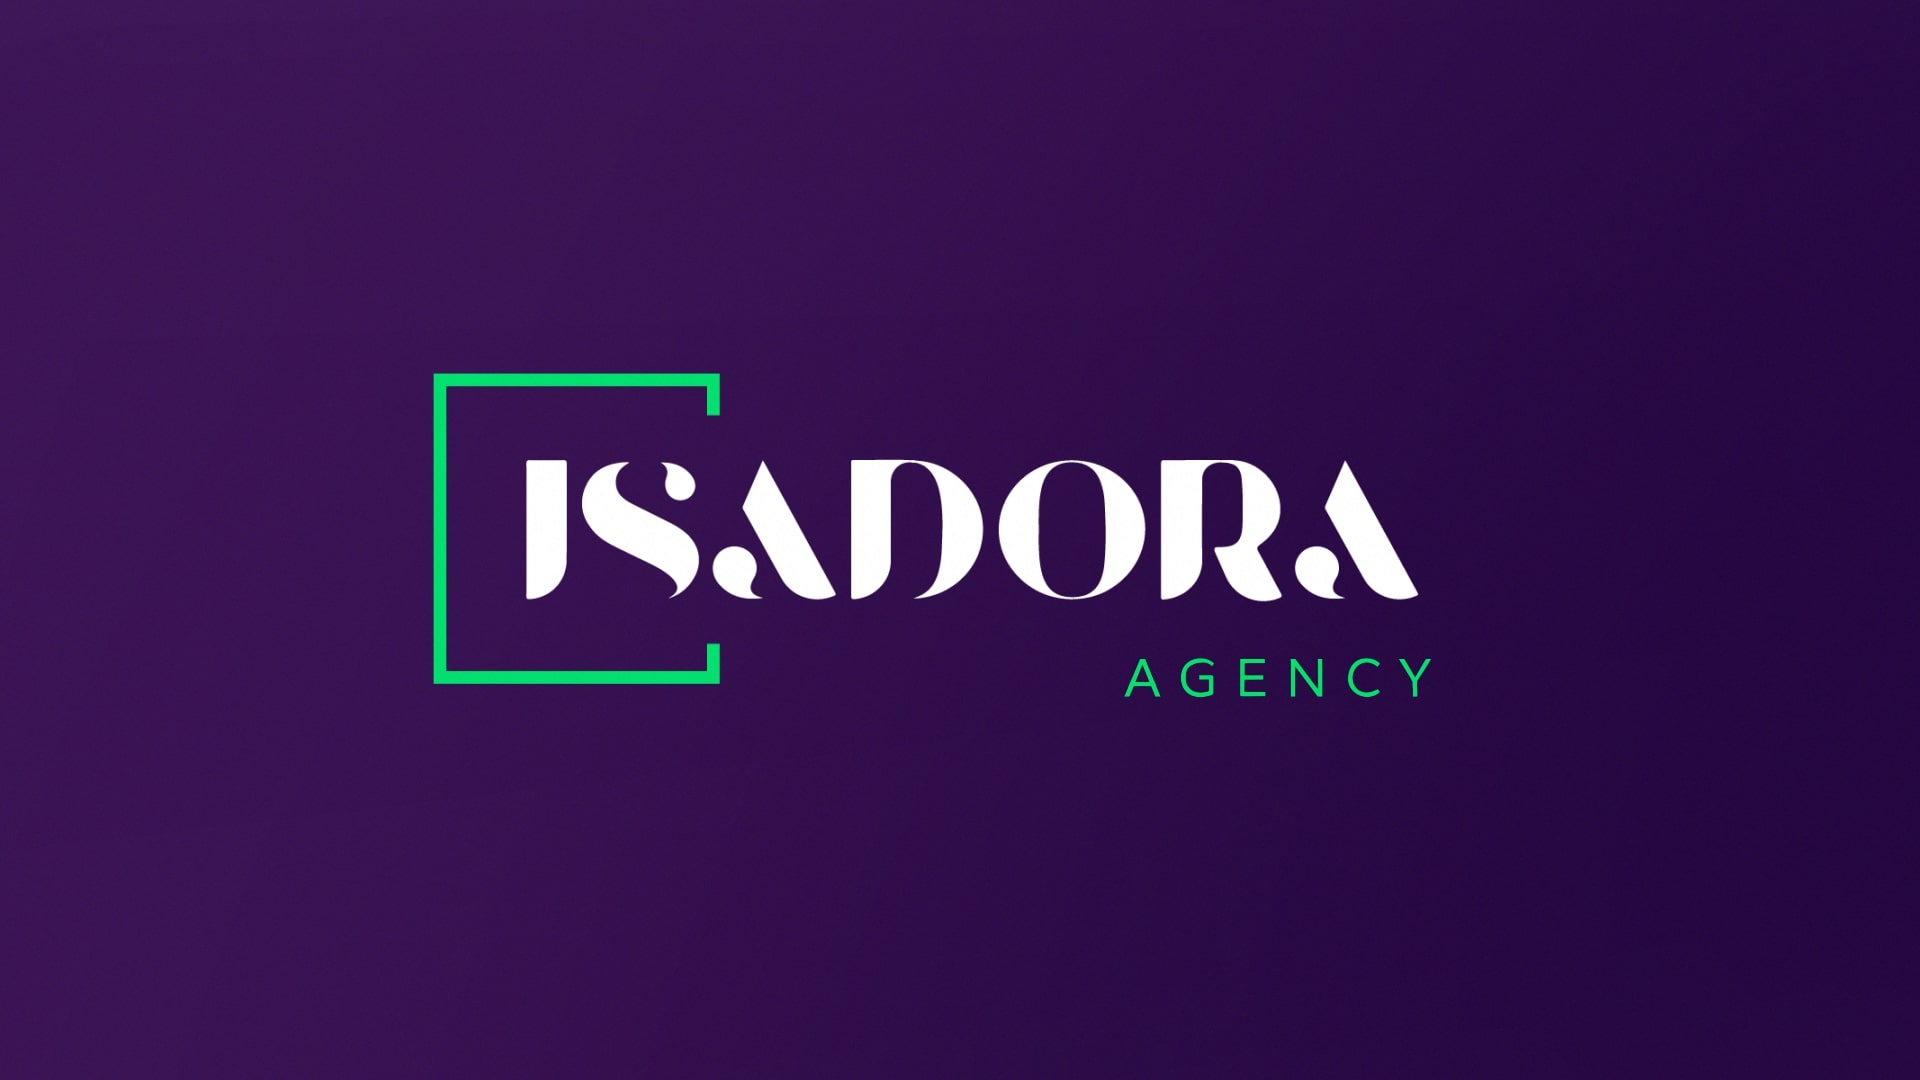 Isadora Digital Agency - Brand Video